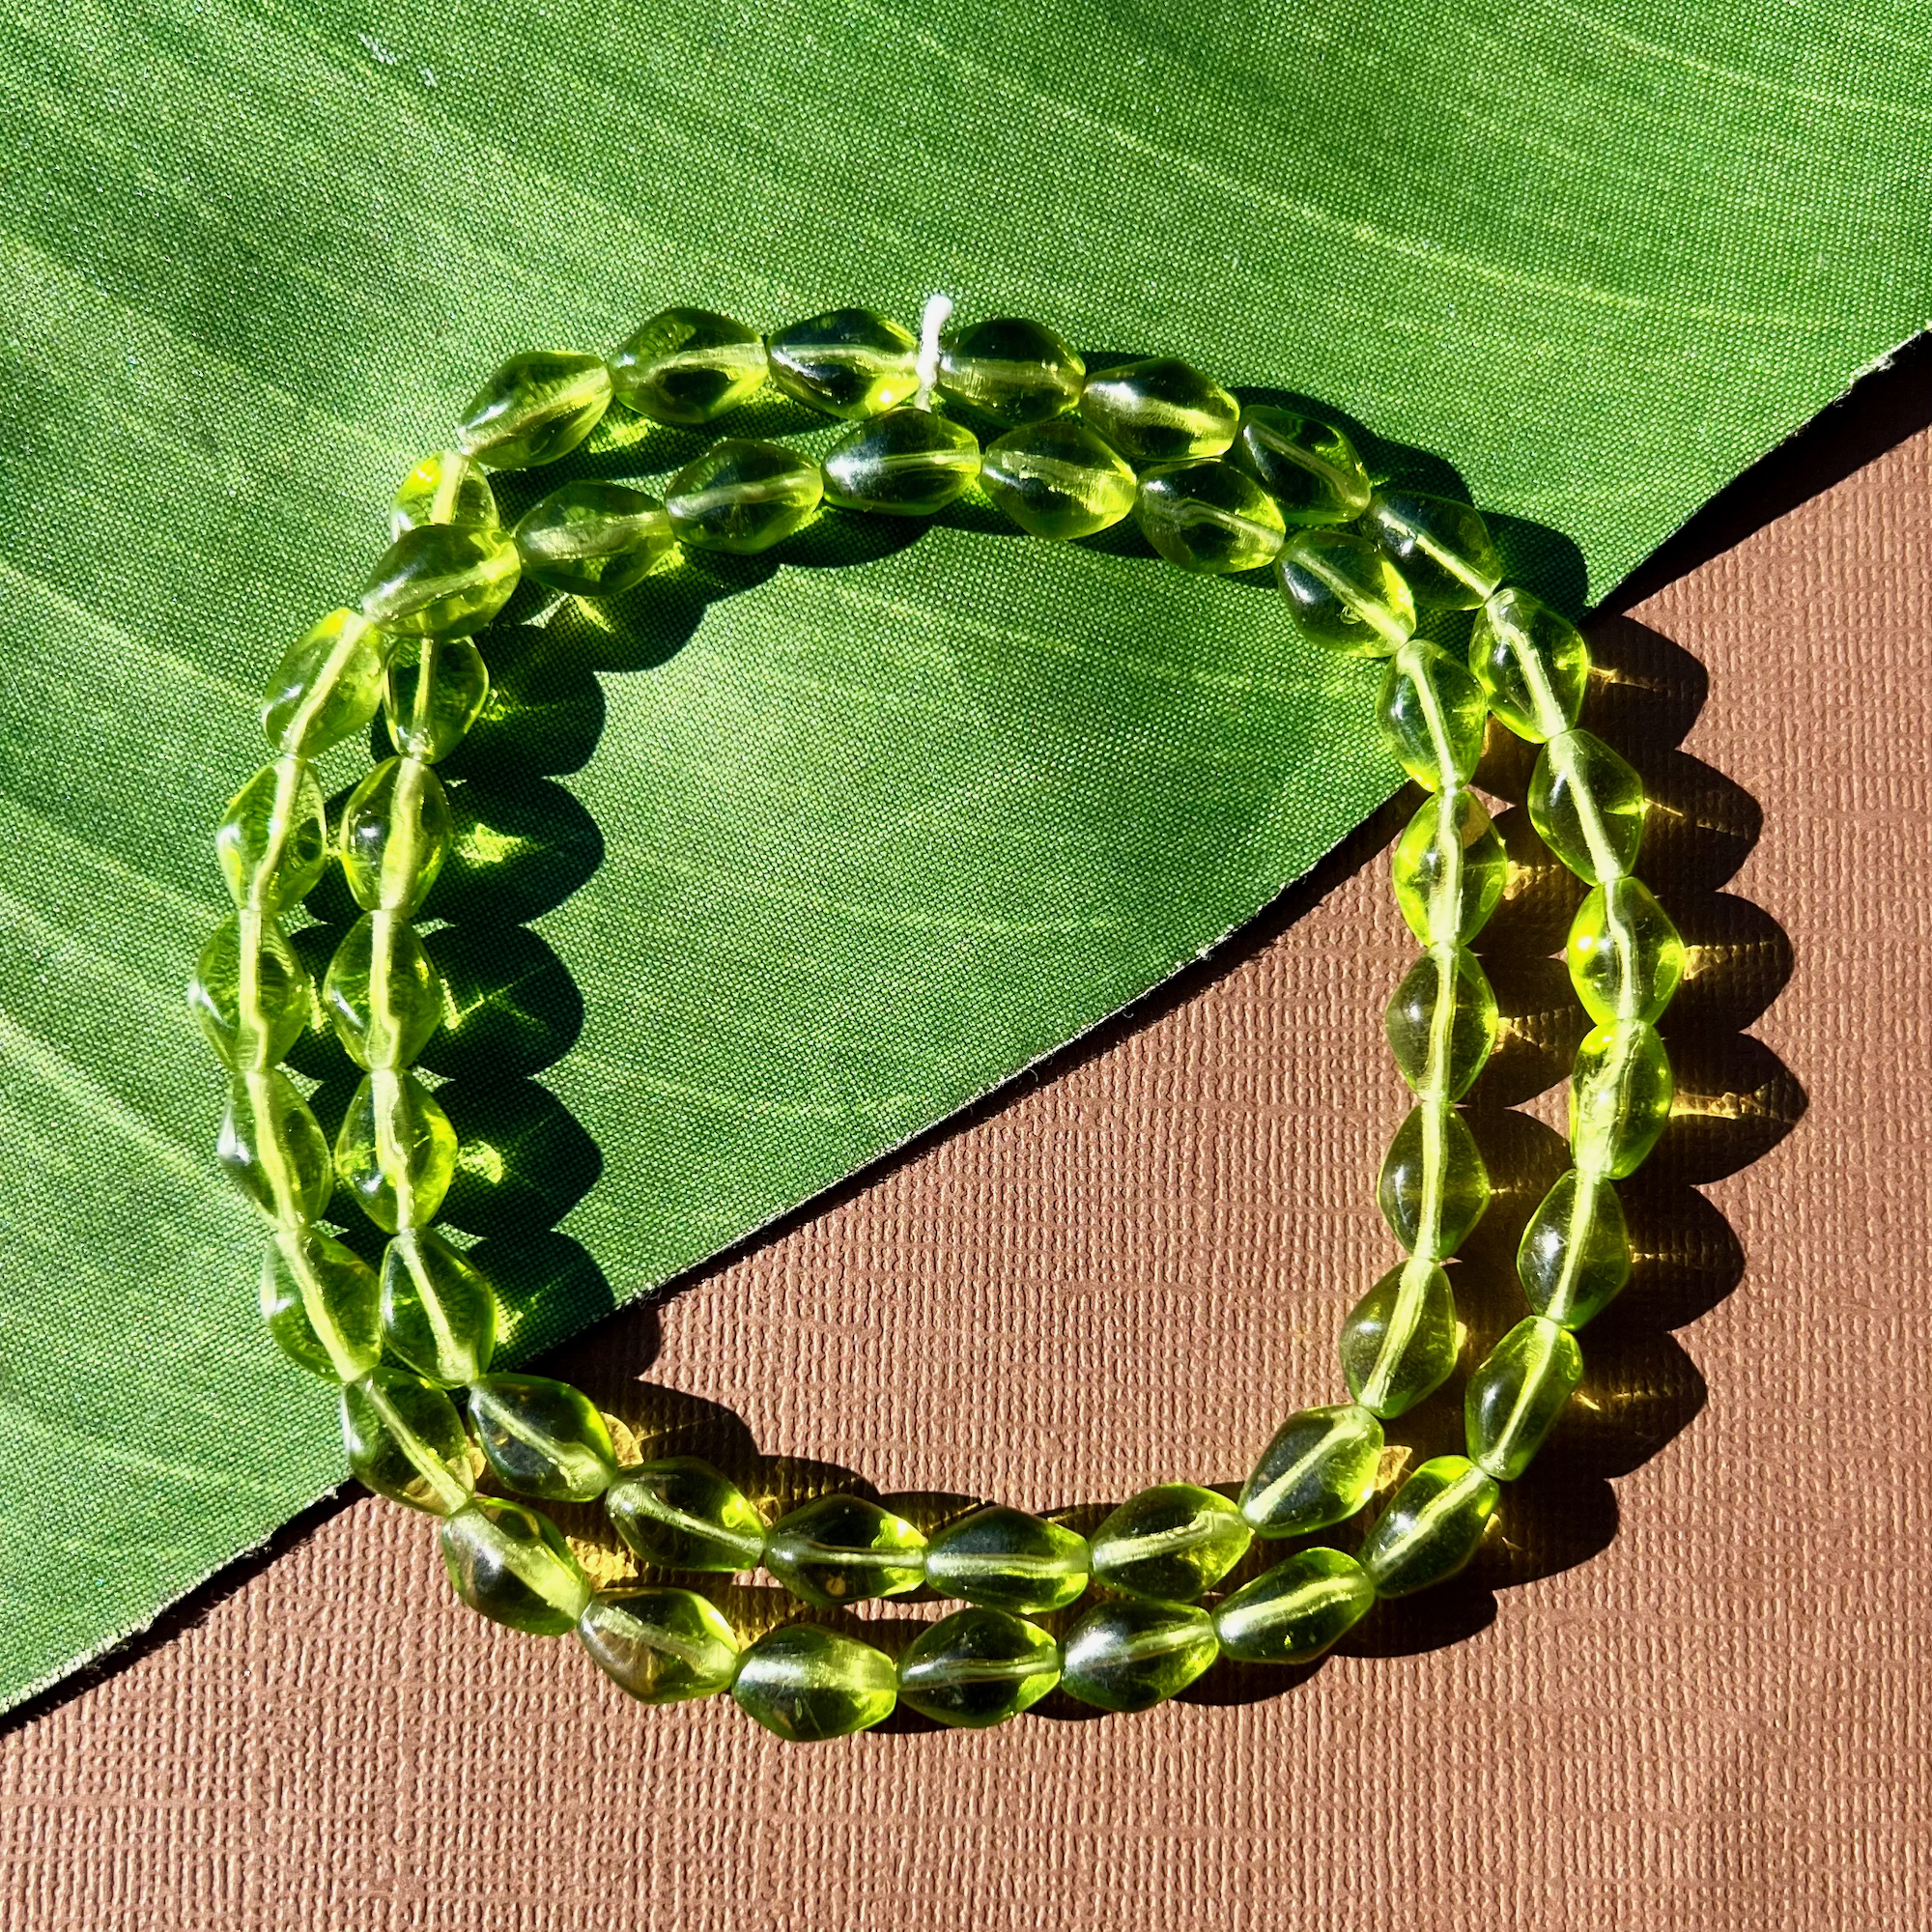 Green Translucent Soft Diamond Beads - 50 Pieces